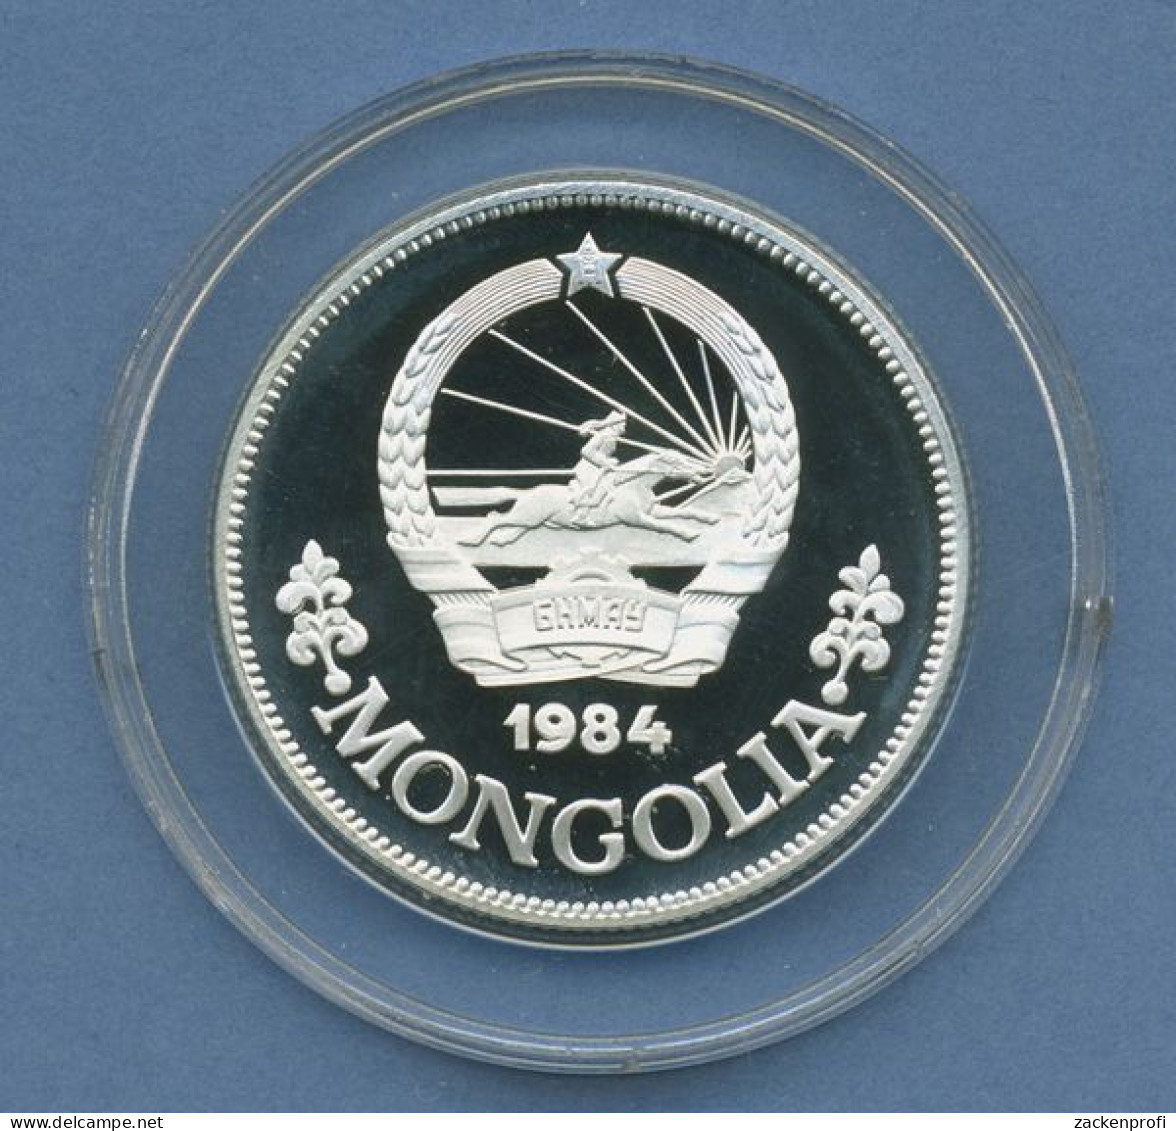 Mongolei 25 Tugrik 1984 Frauendekade Frau, Kind, Silber, KM 47 PP Kapsel (m4379) - Mongolie